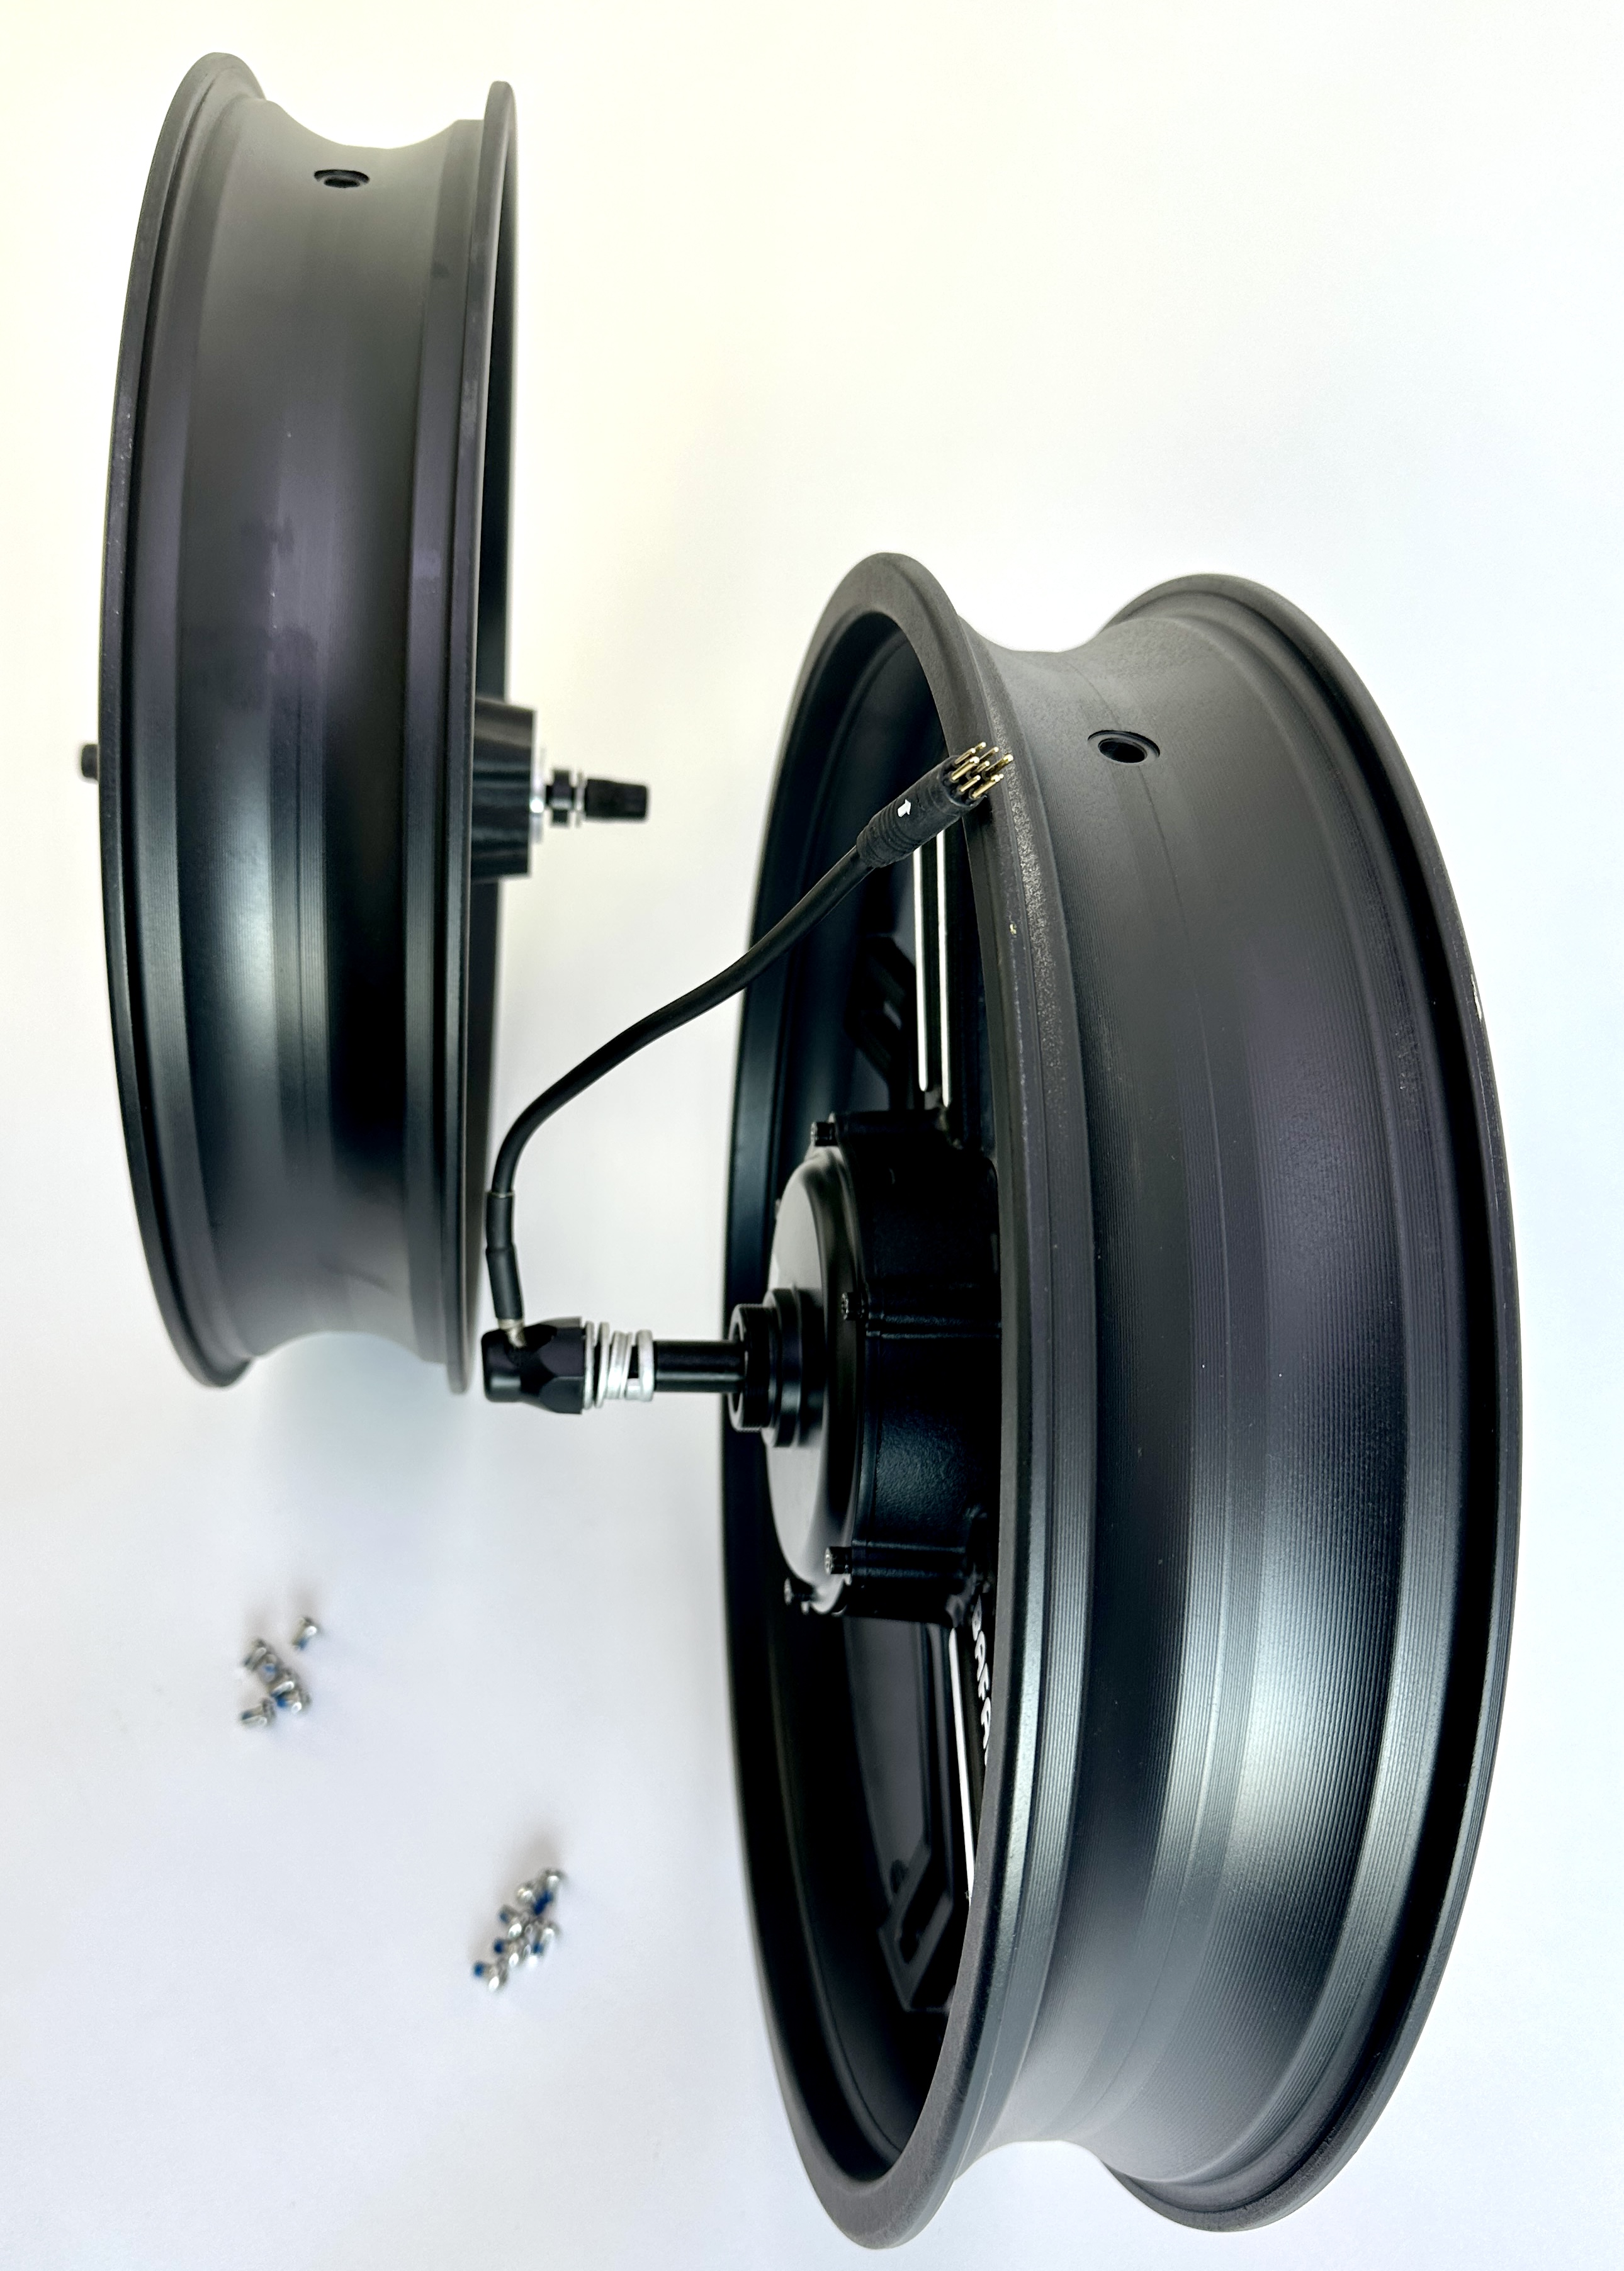 204 Bafang wheel set die-cast aluminium with 500W motor, 20 x 4